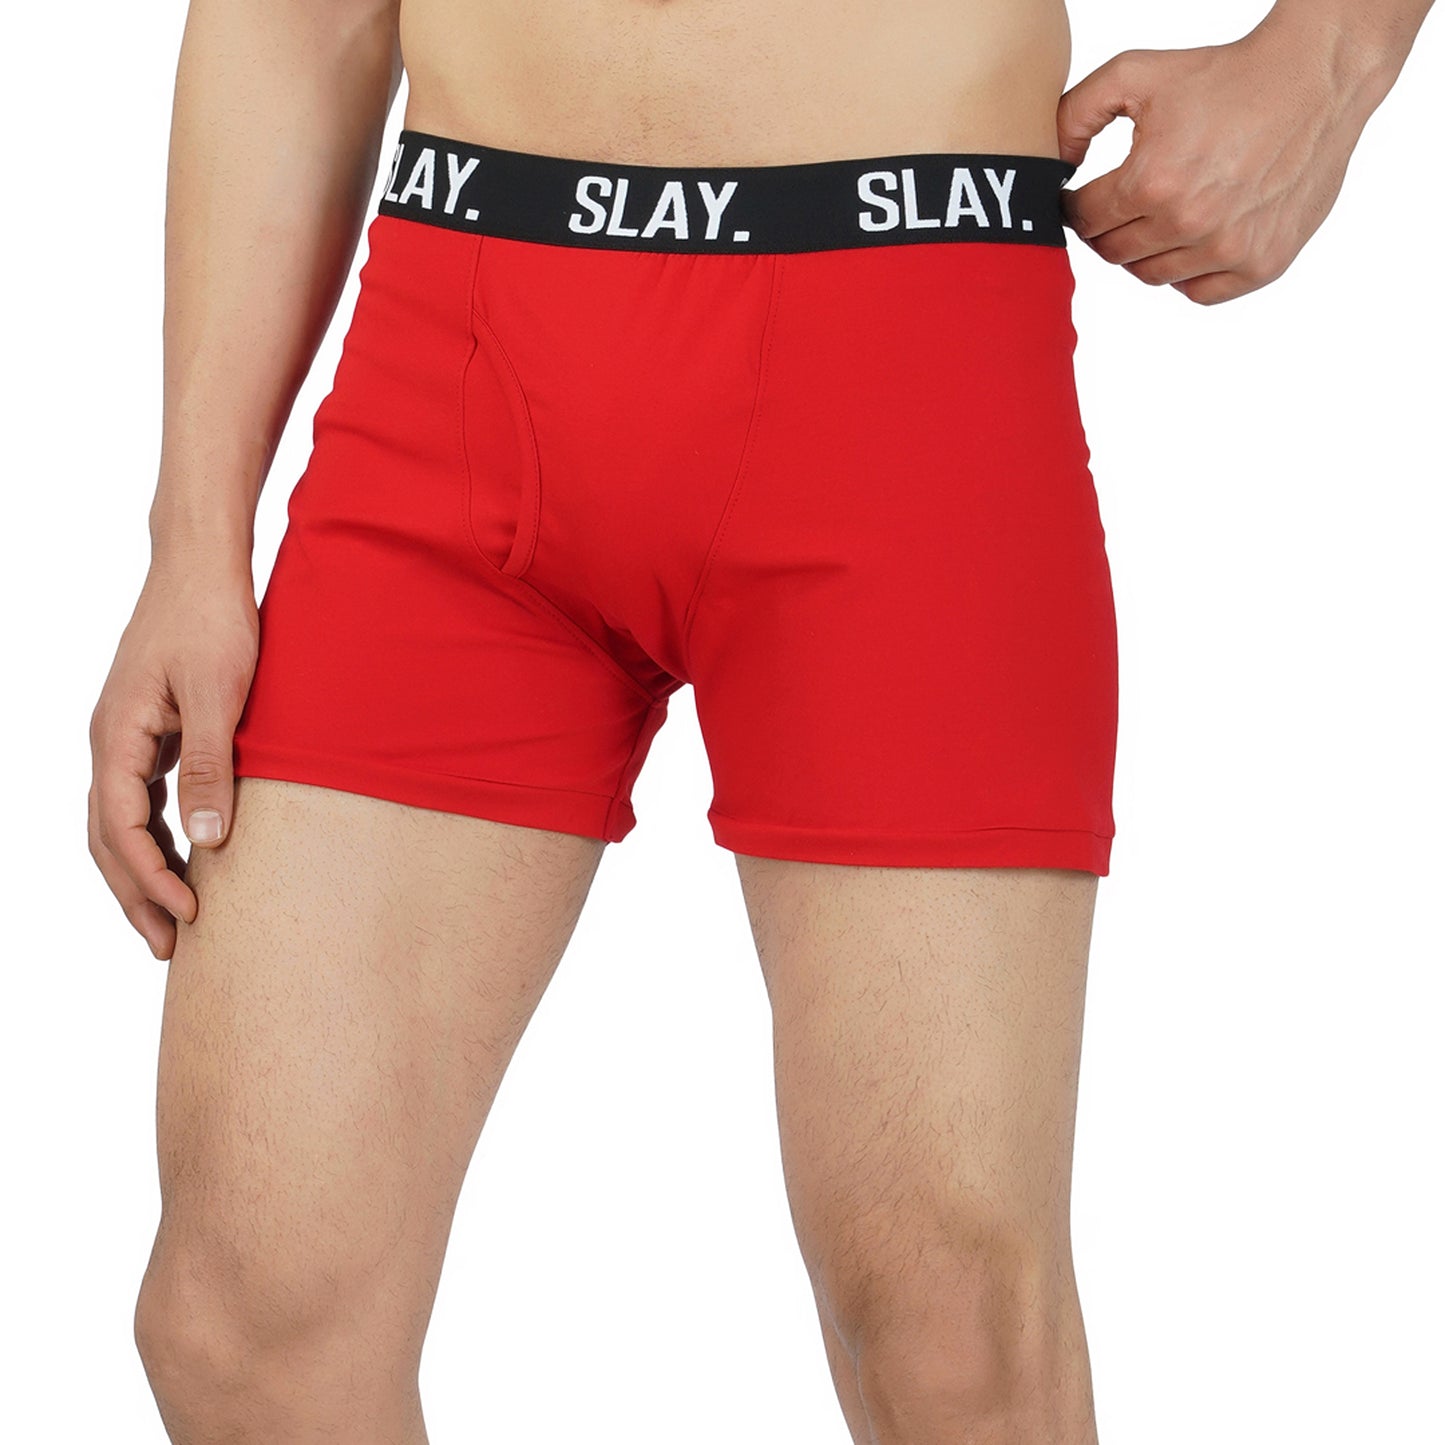 SLAY. Men's Red Underwear Trunks